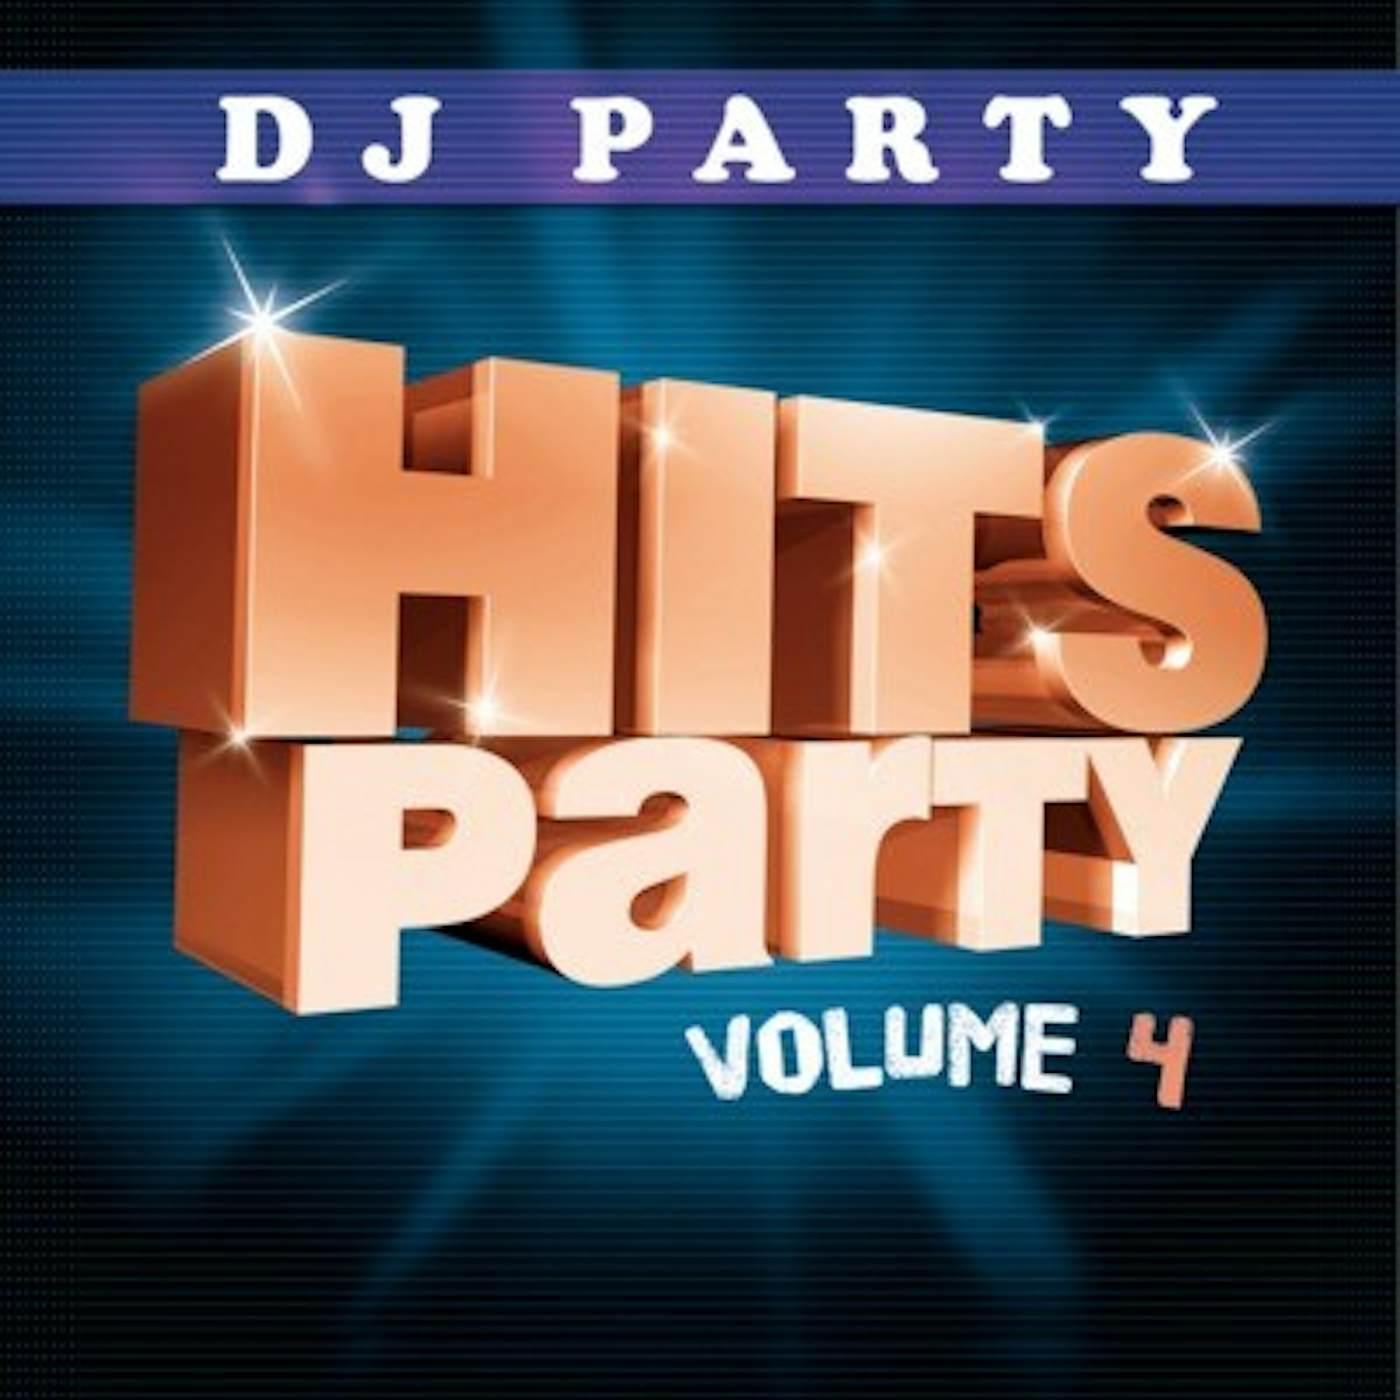 DJ Party HITS PARTY VOL. 4 CD